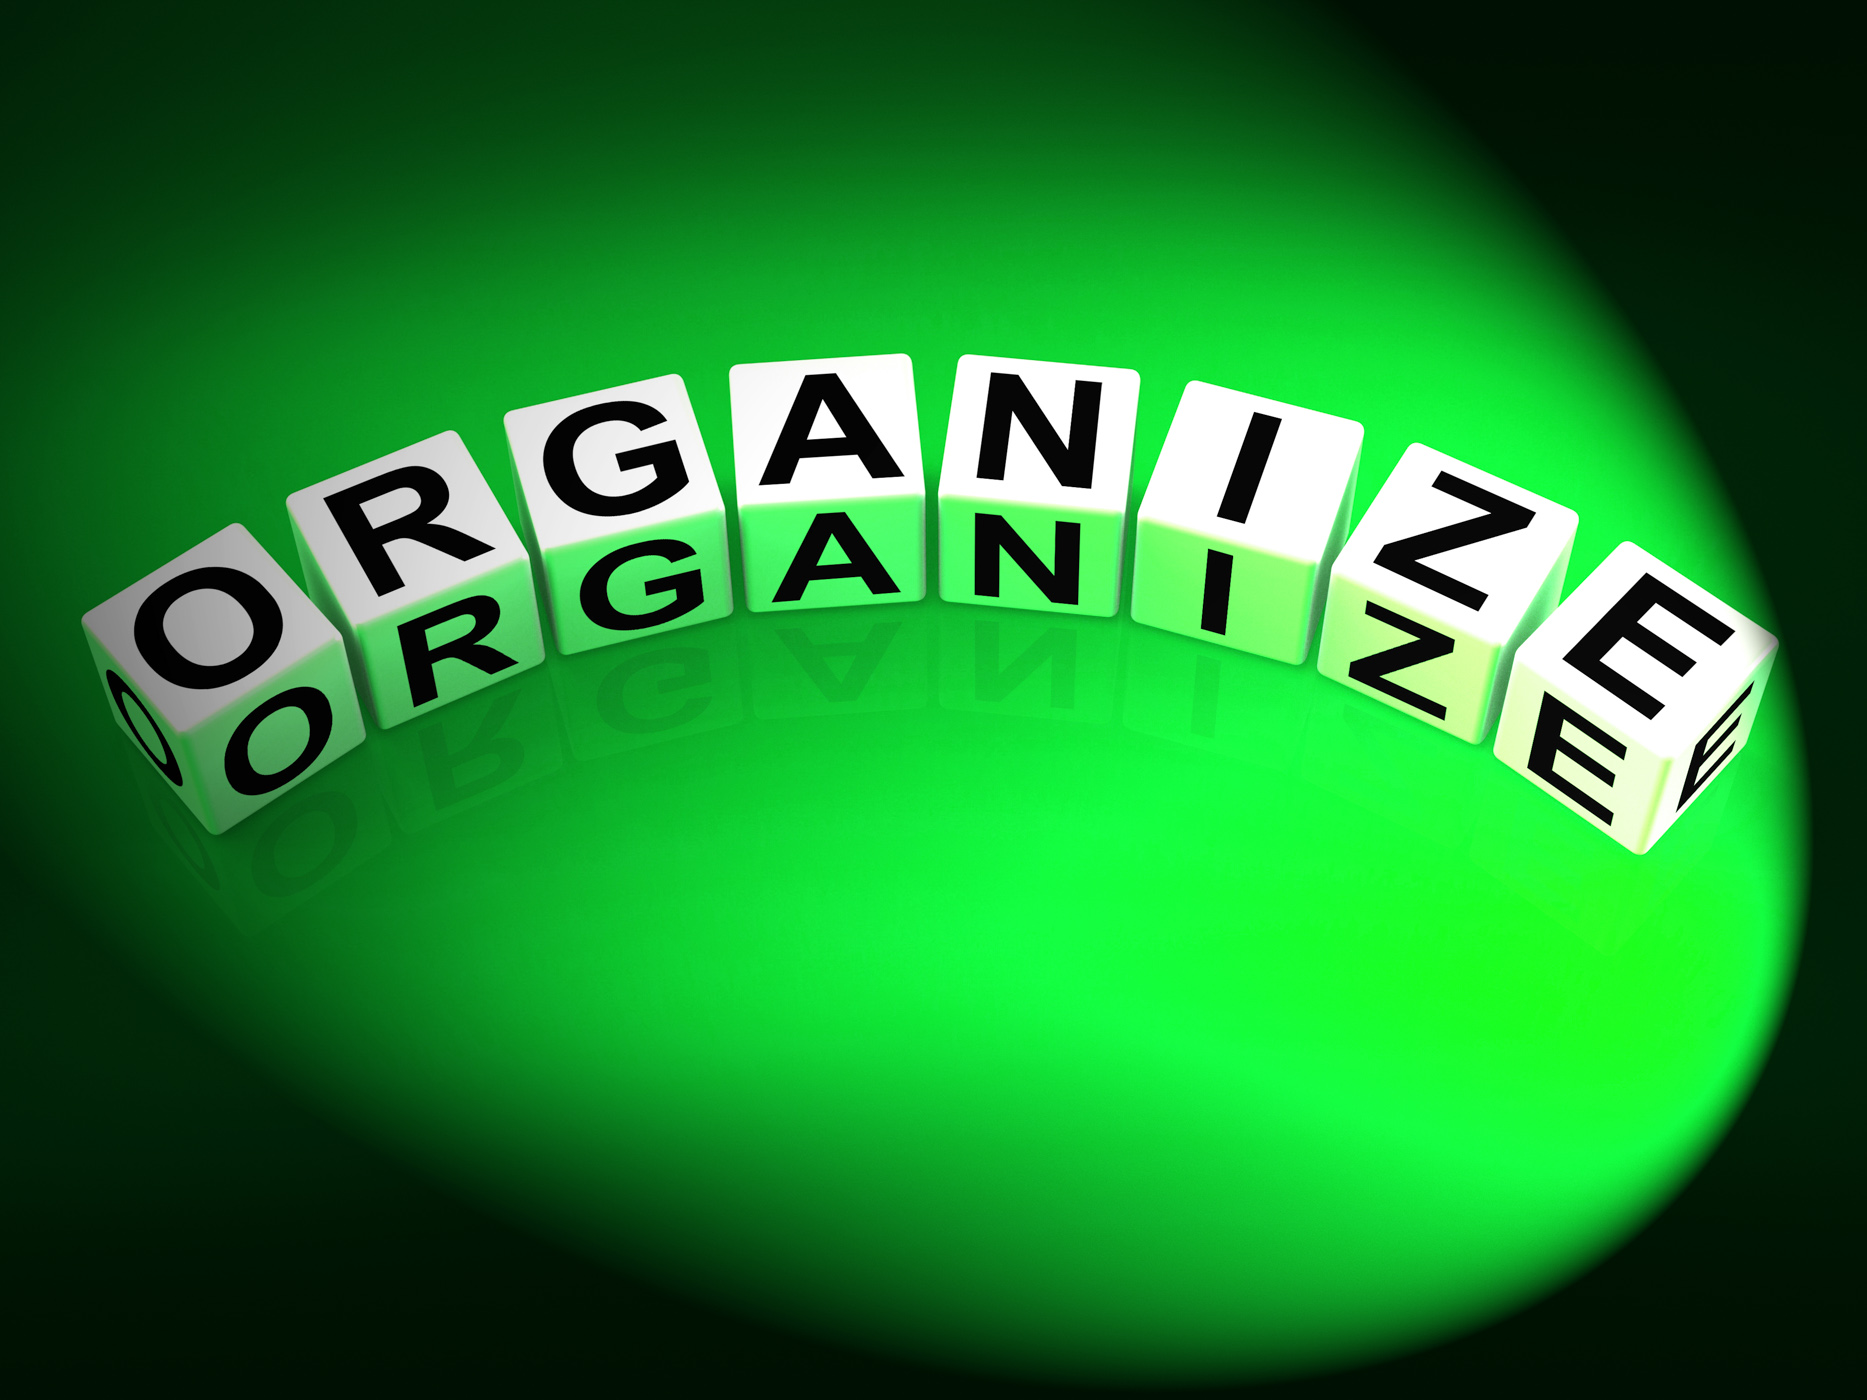 Organize dice represent organization management and established struct photo